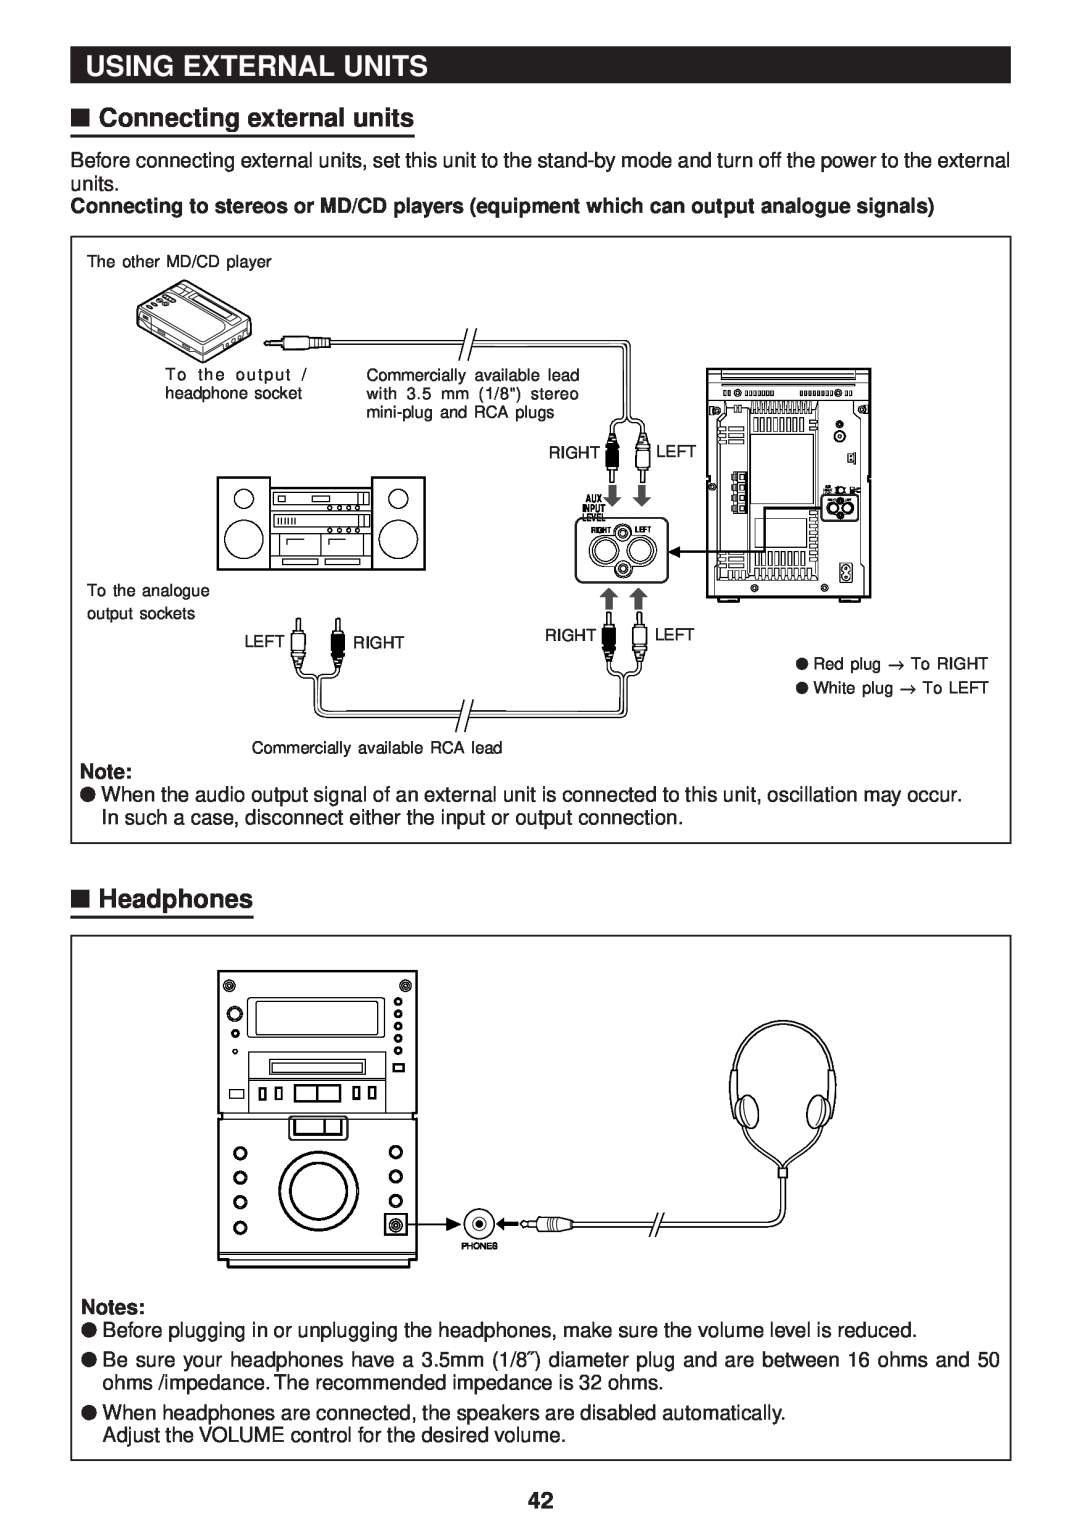 Sharp MD-M3H operation manual Using External Units, Connecting external units, Headphones 